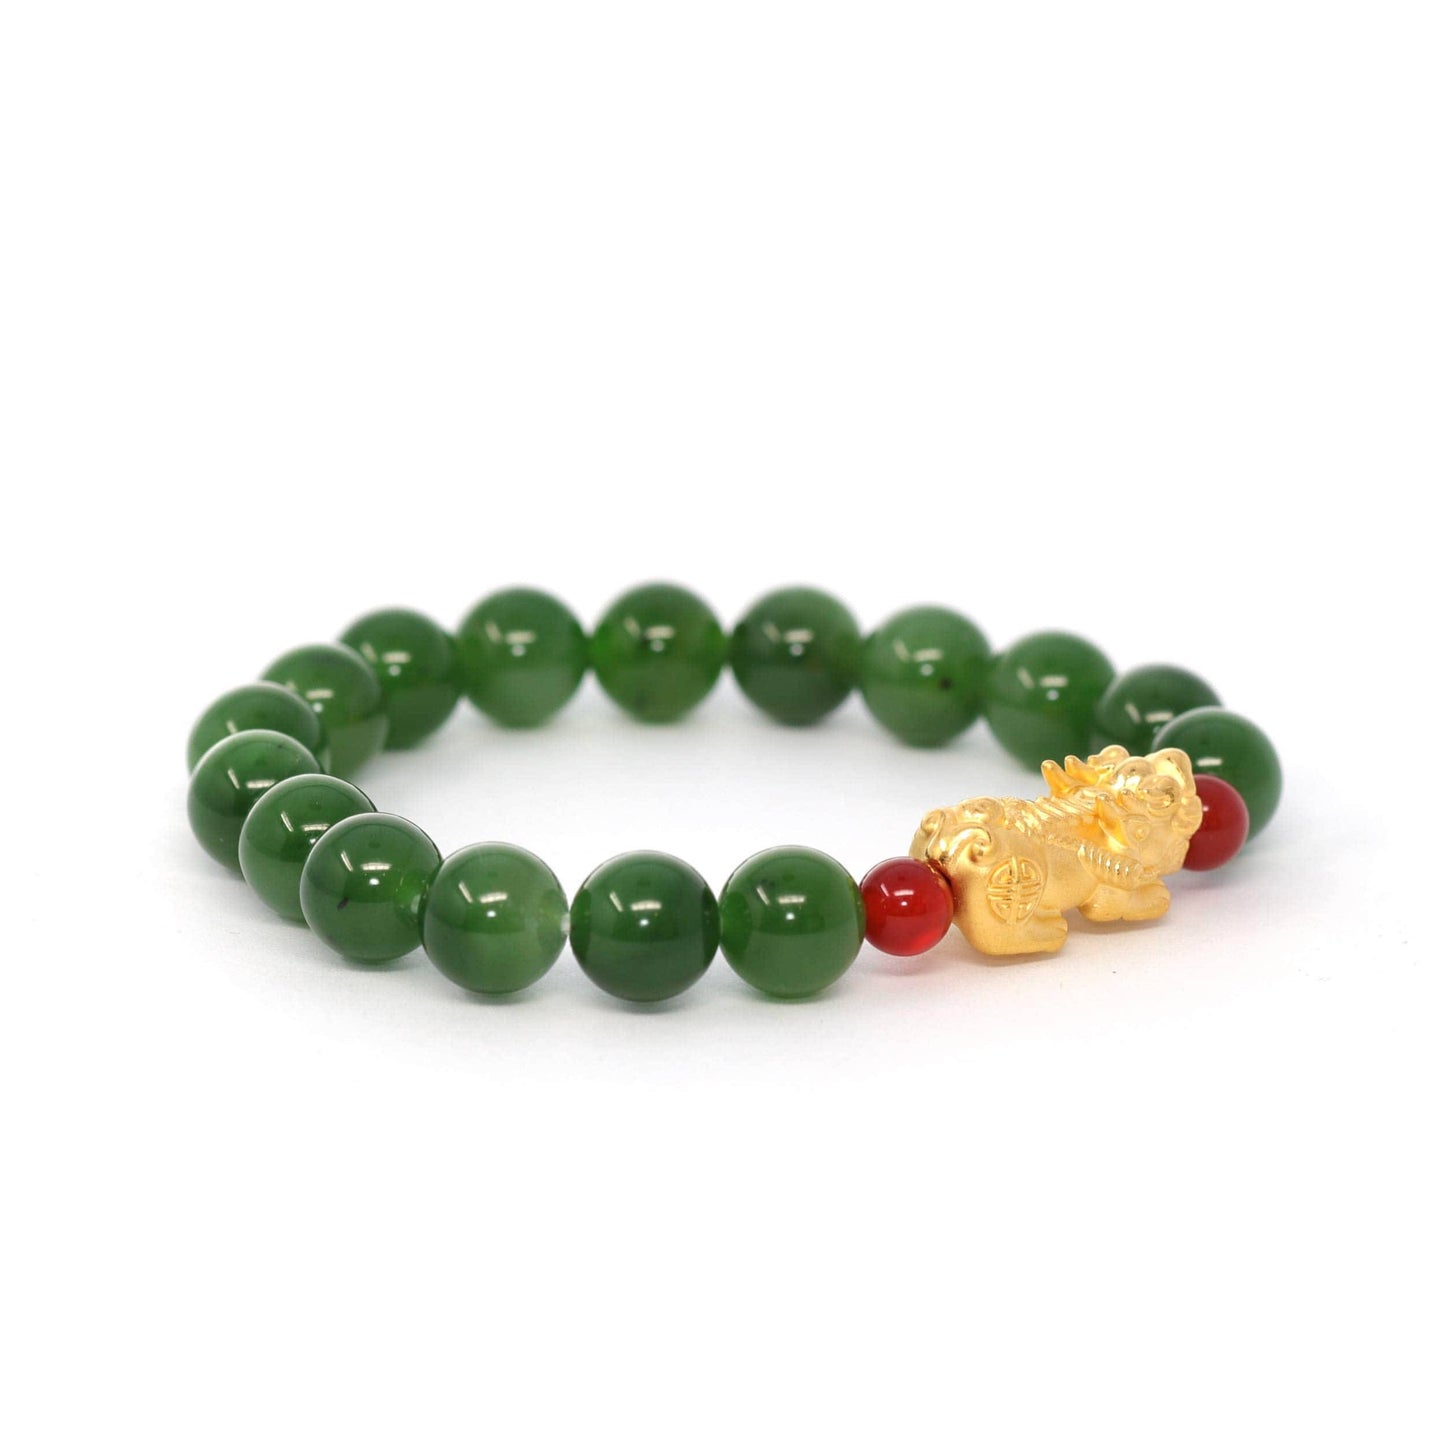 24K Pure Yellow Gold "Pixiu" With Genuine Green Jade Round Beads Bracelet Bangle ( 9.5 mm )